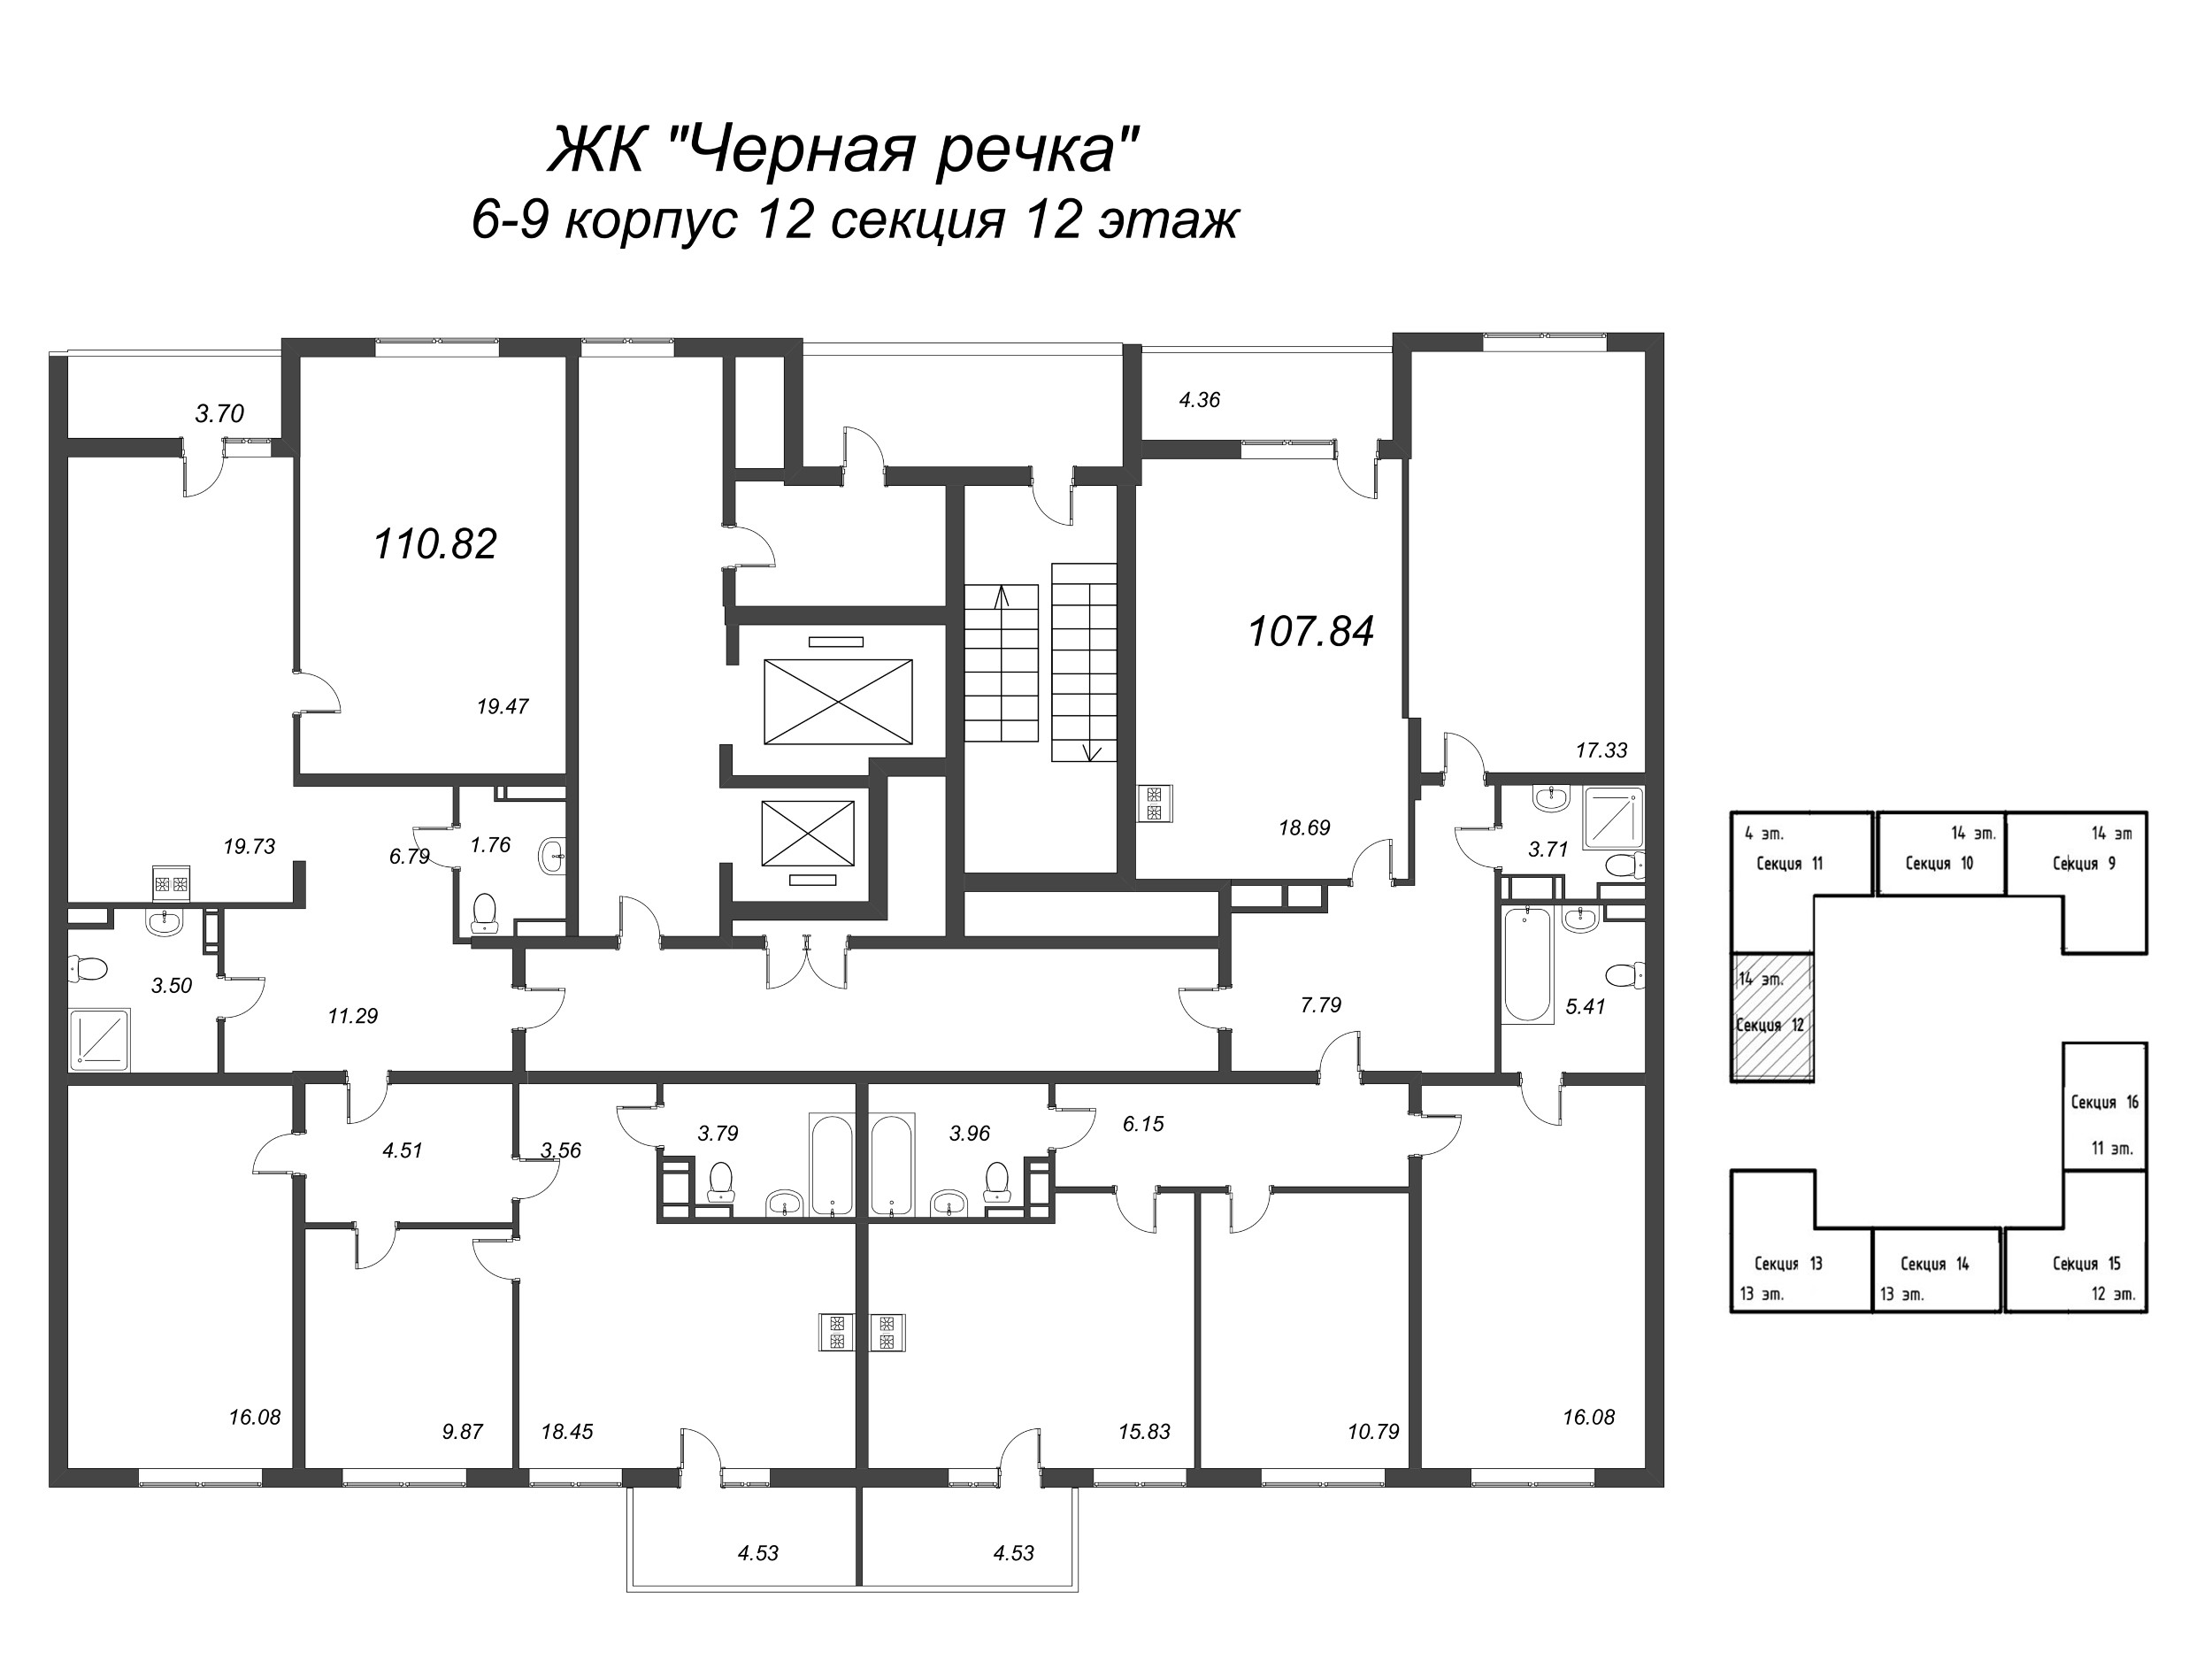 4-комнатная квартира, 110.82 м² в ЖК "Чёрная речка от Ильича" - планировка этажа